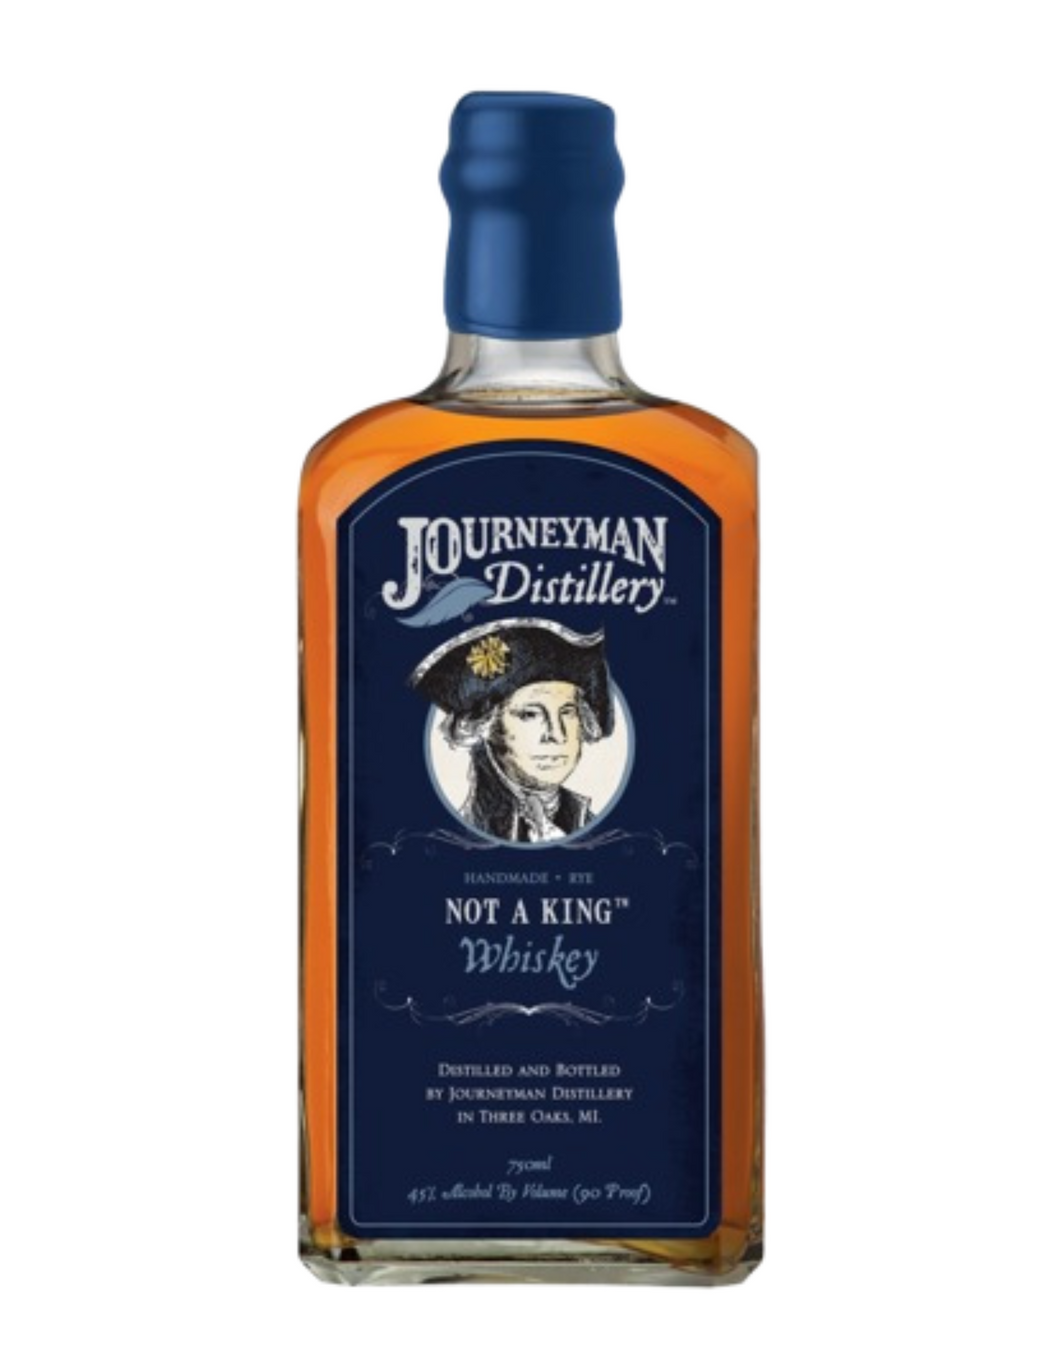 Journeyman Distillery Not a King Rye Whiskey